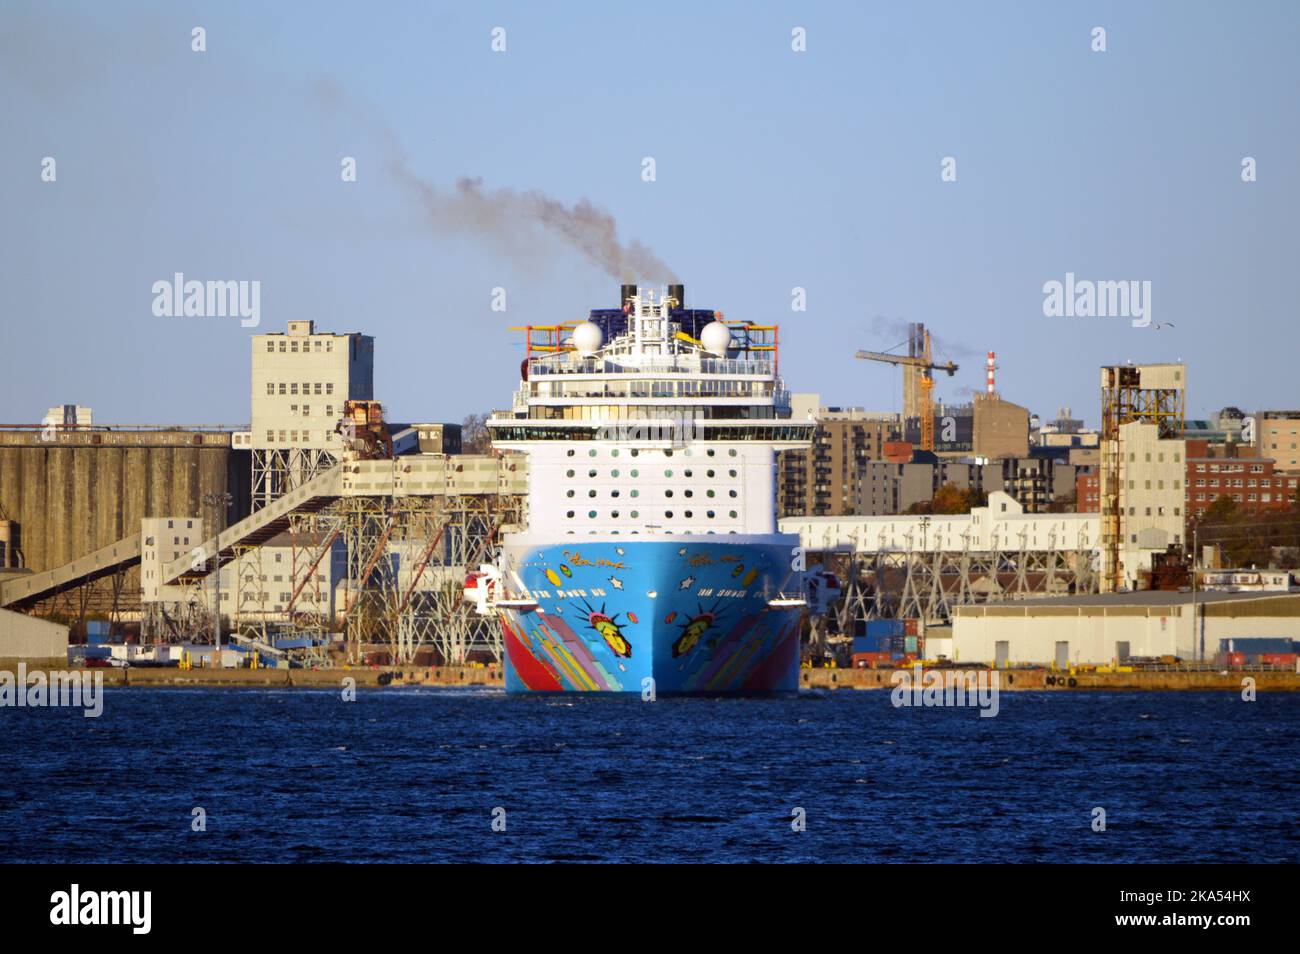 Norwegian Breakaway, a cruise ship operated by Norwegian Cruise Line (NCL), docking in Halifax Harbour, Nova Scotia, Canada (October 2022) Stock Photo